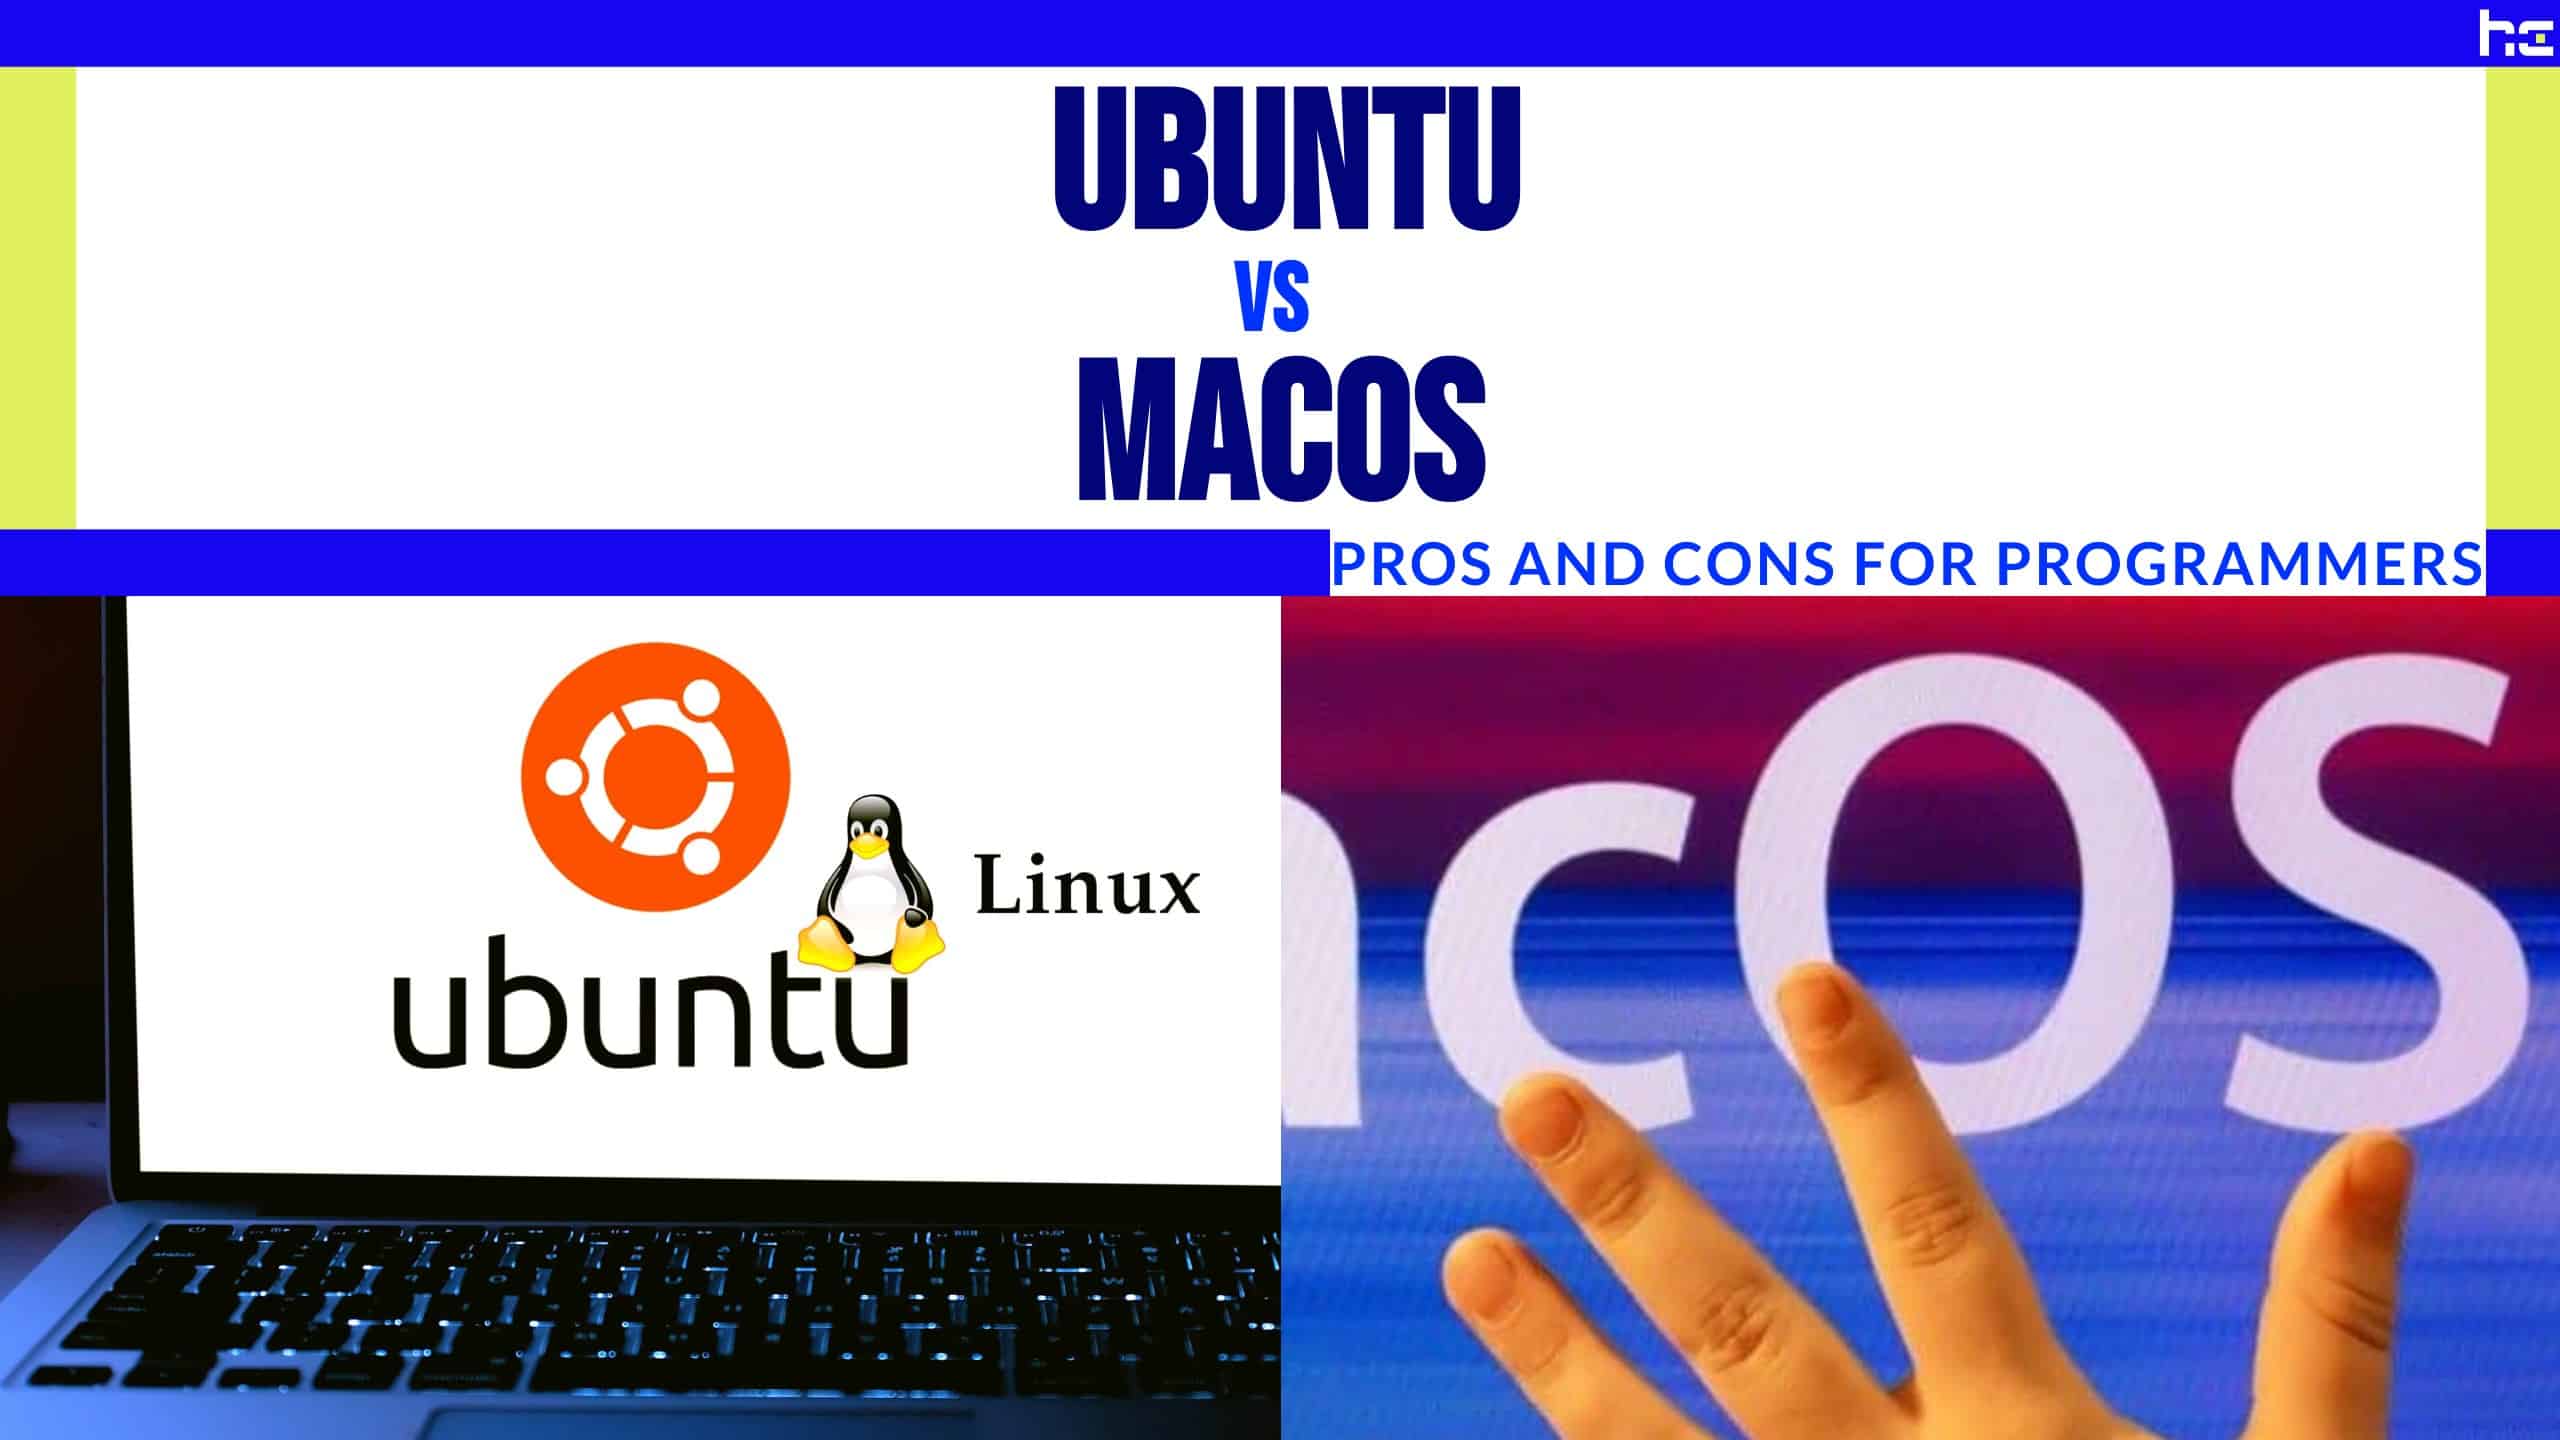 Ubuntu vs macOS featured image